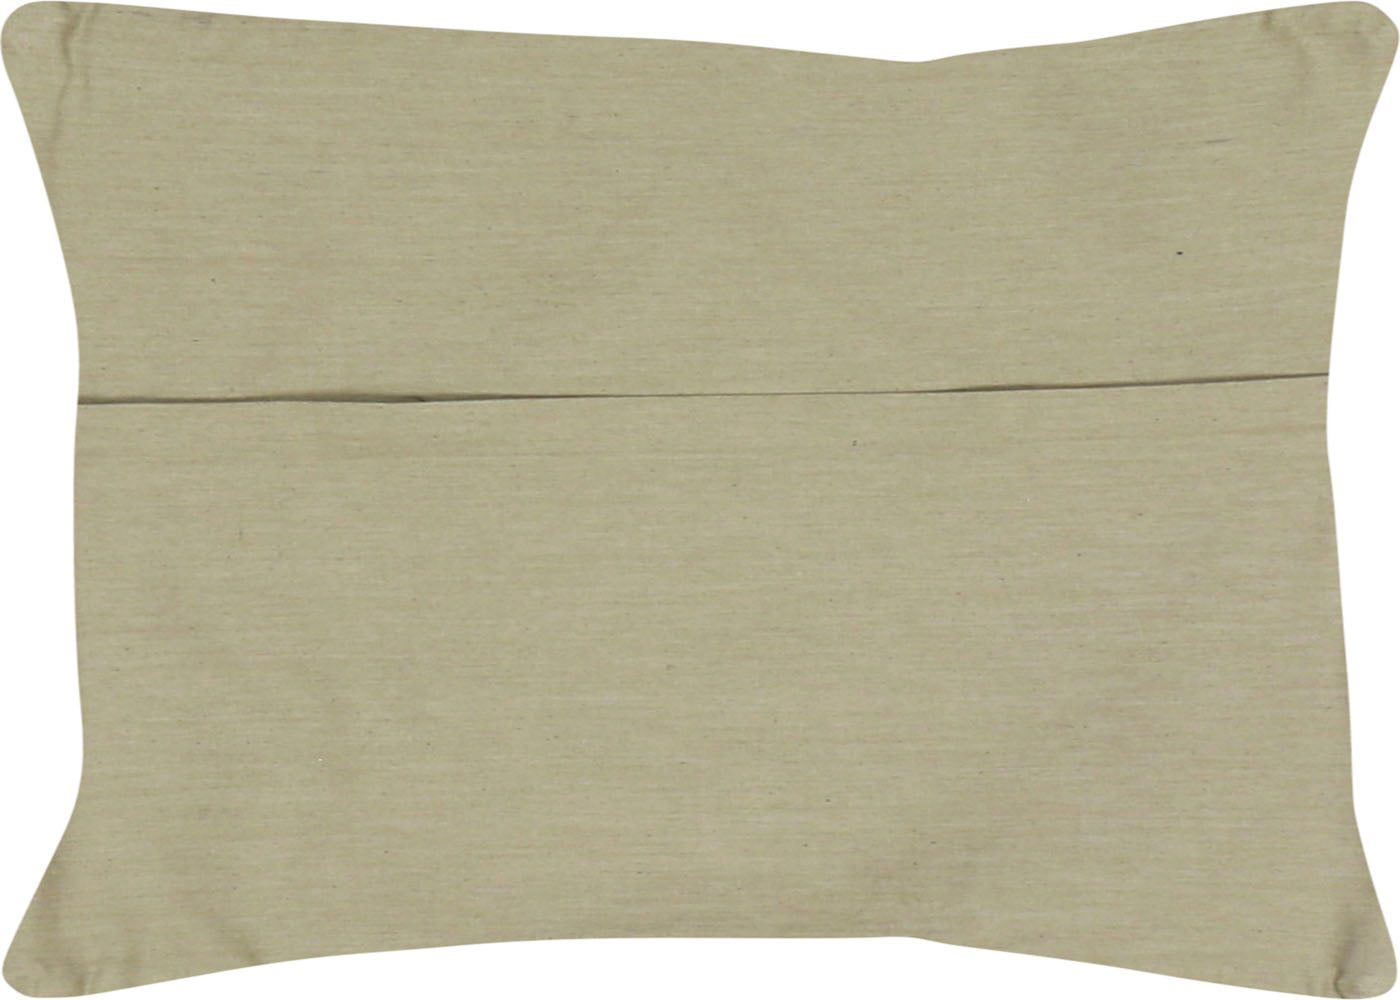 Vintage Turkish Rag Pillow - 16" x 24"